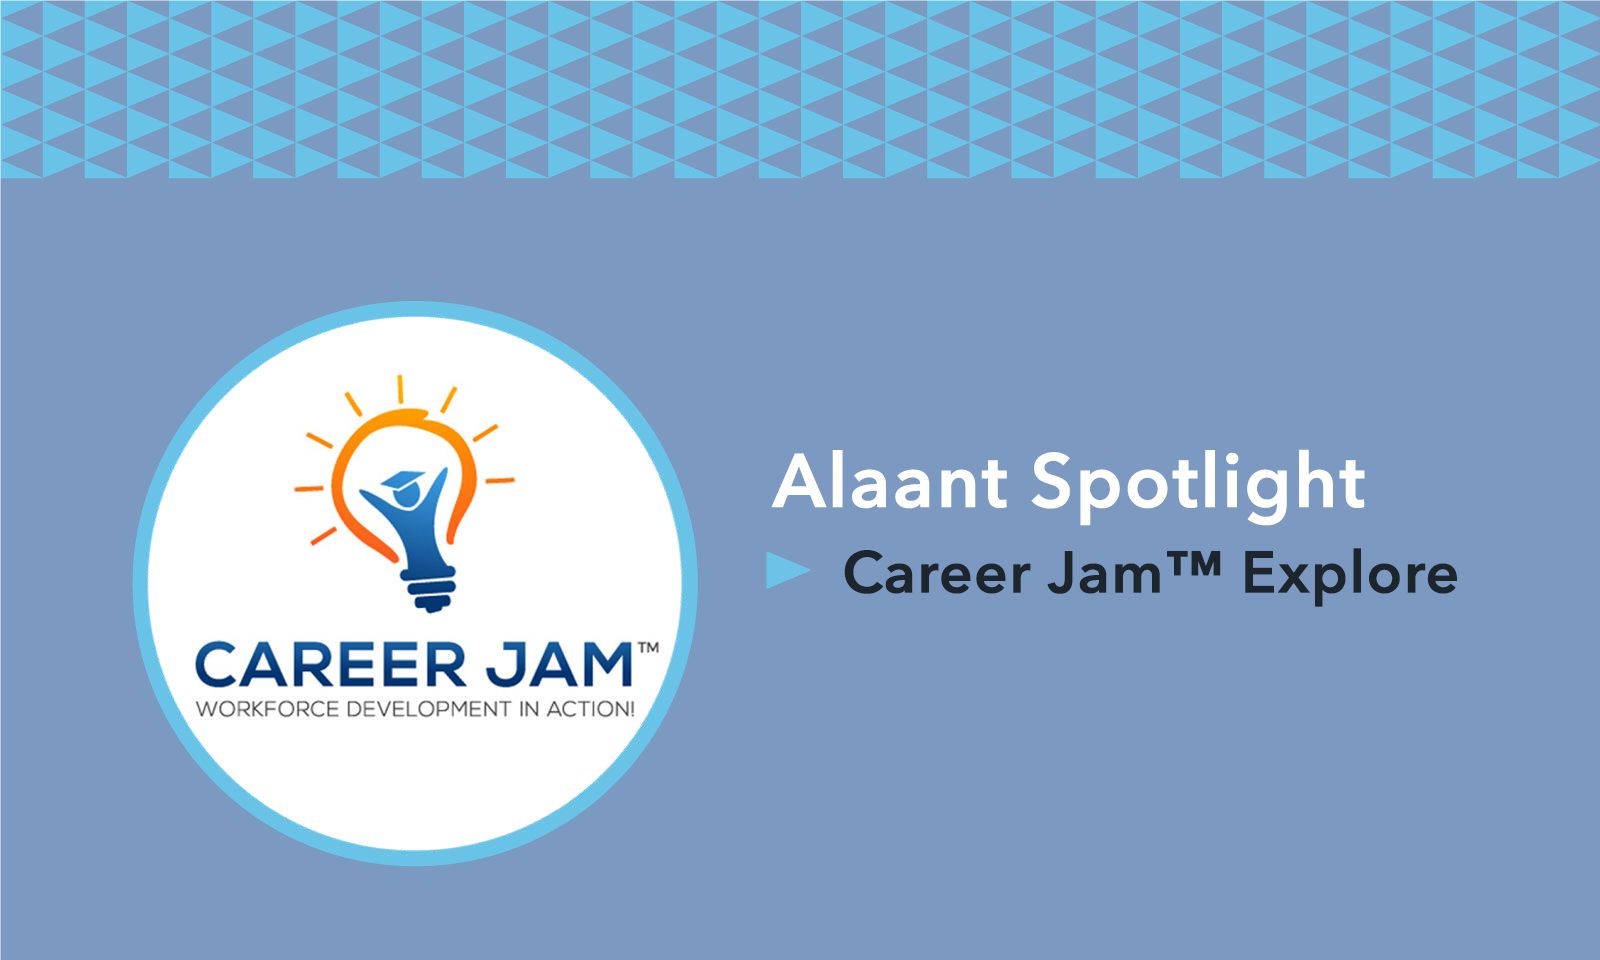 Alaant Spotlight Career Jam™ Explore